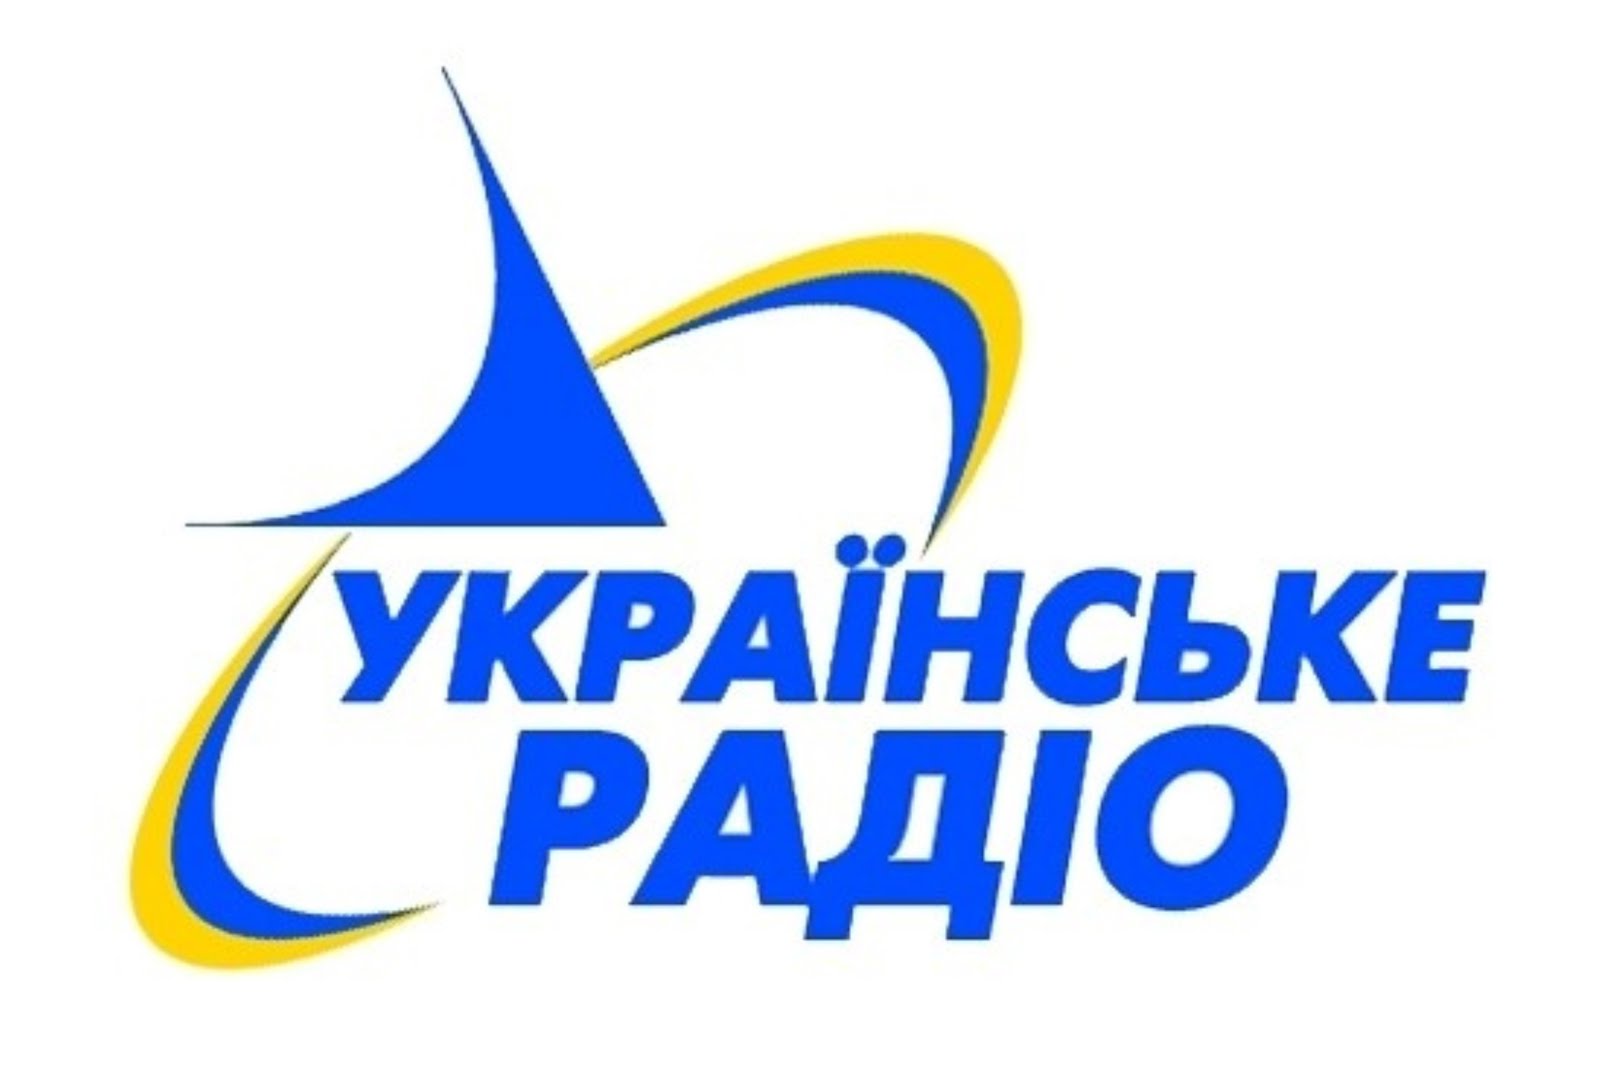 Українське радіо "Культура"